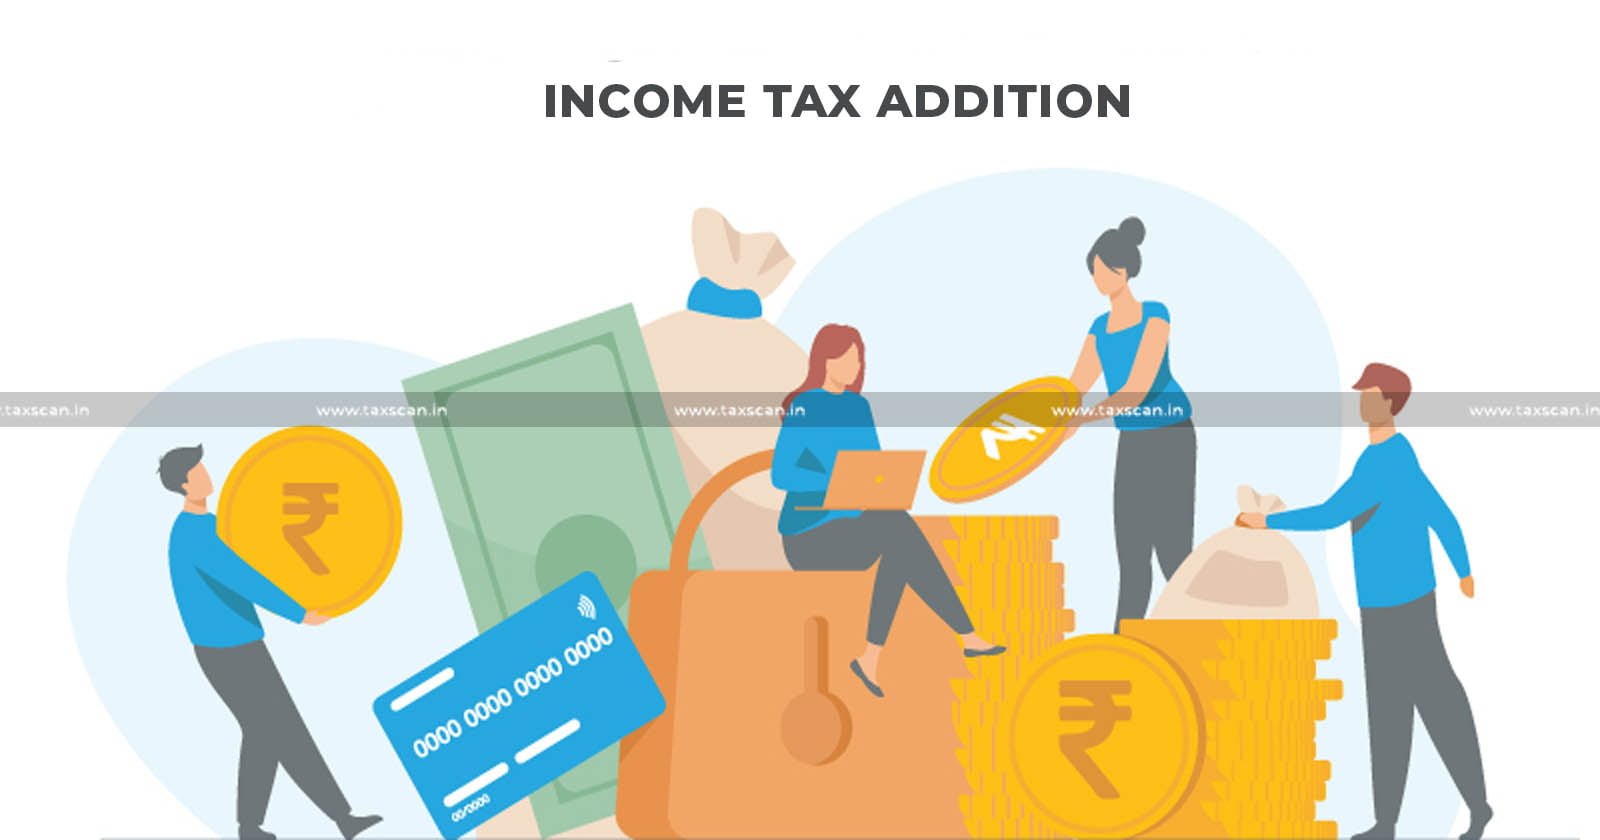 ITAT - Income Tax Appellate Tribunal - Income Tax Addition - TAXSCAN